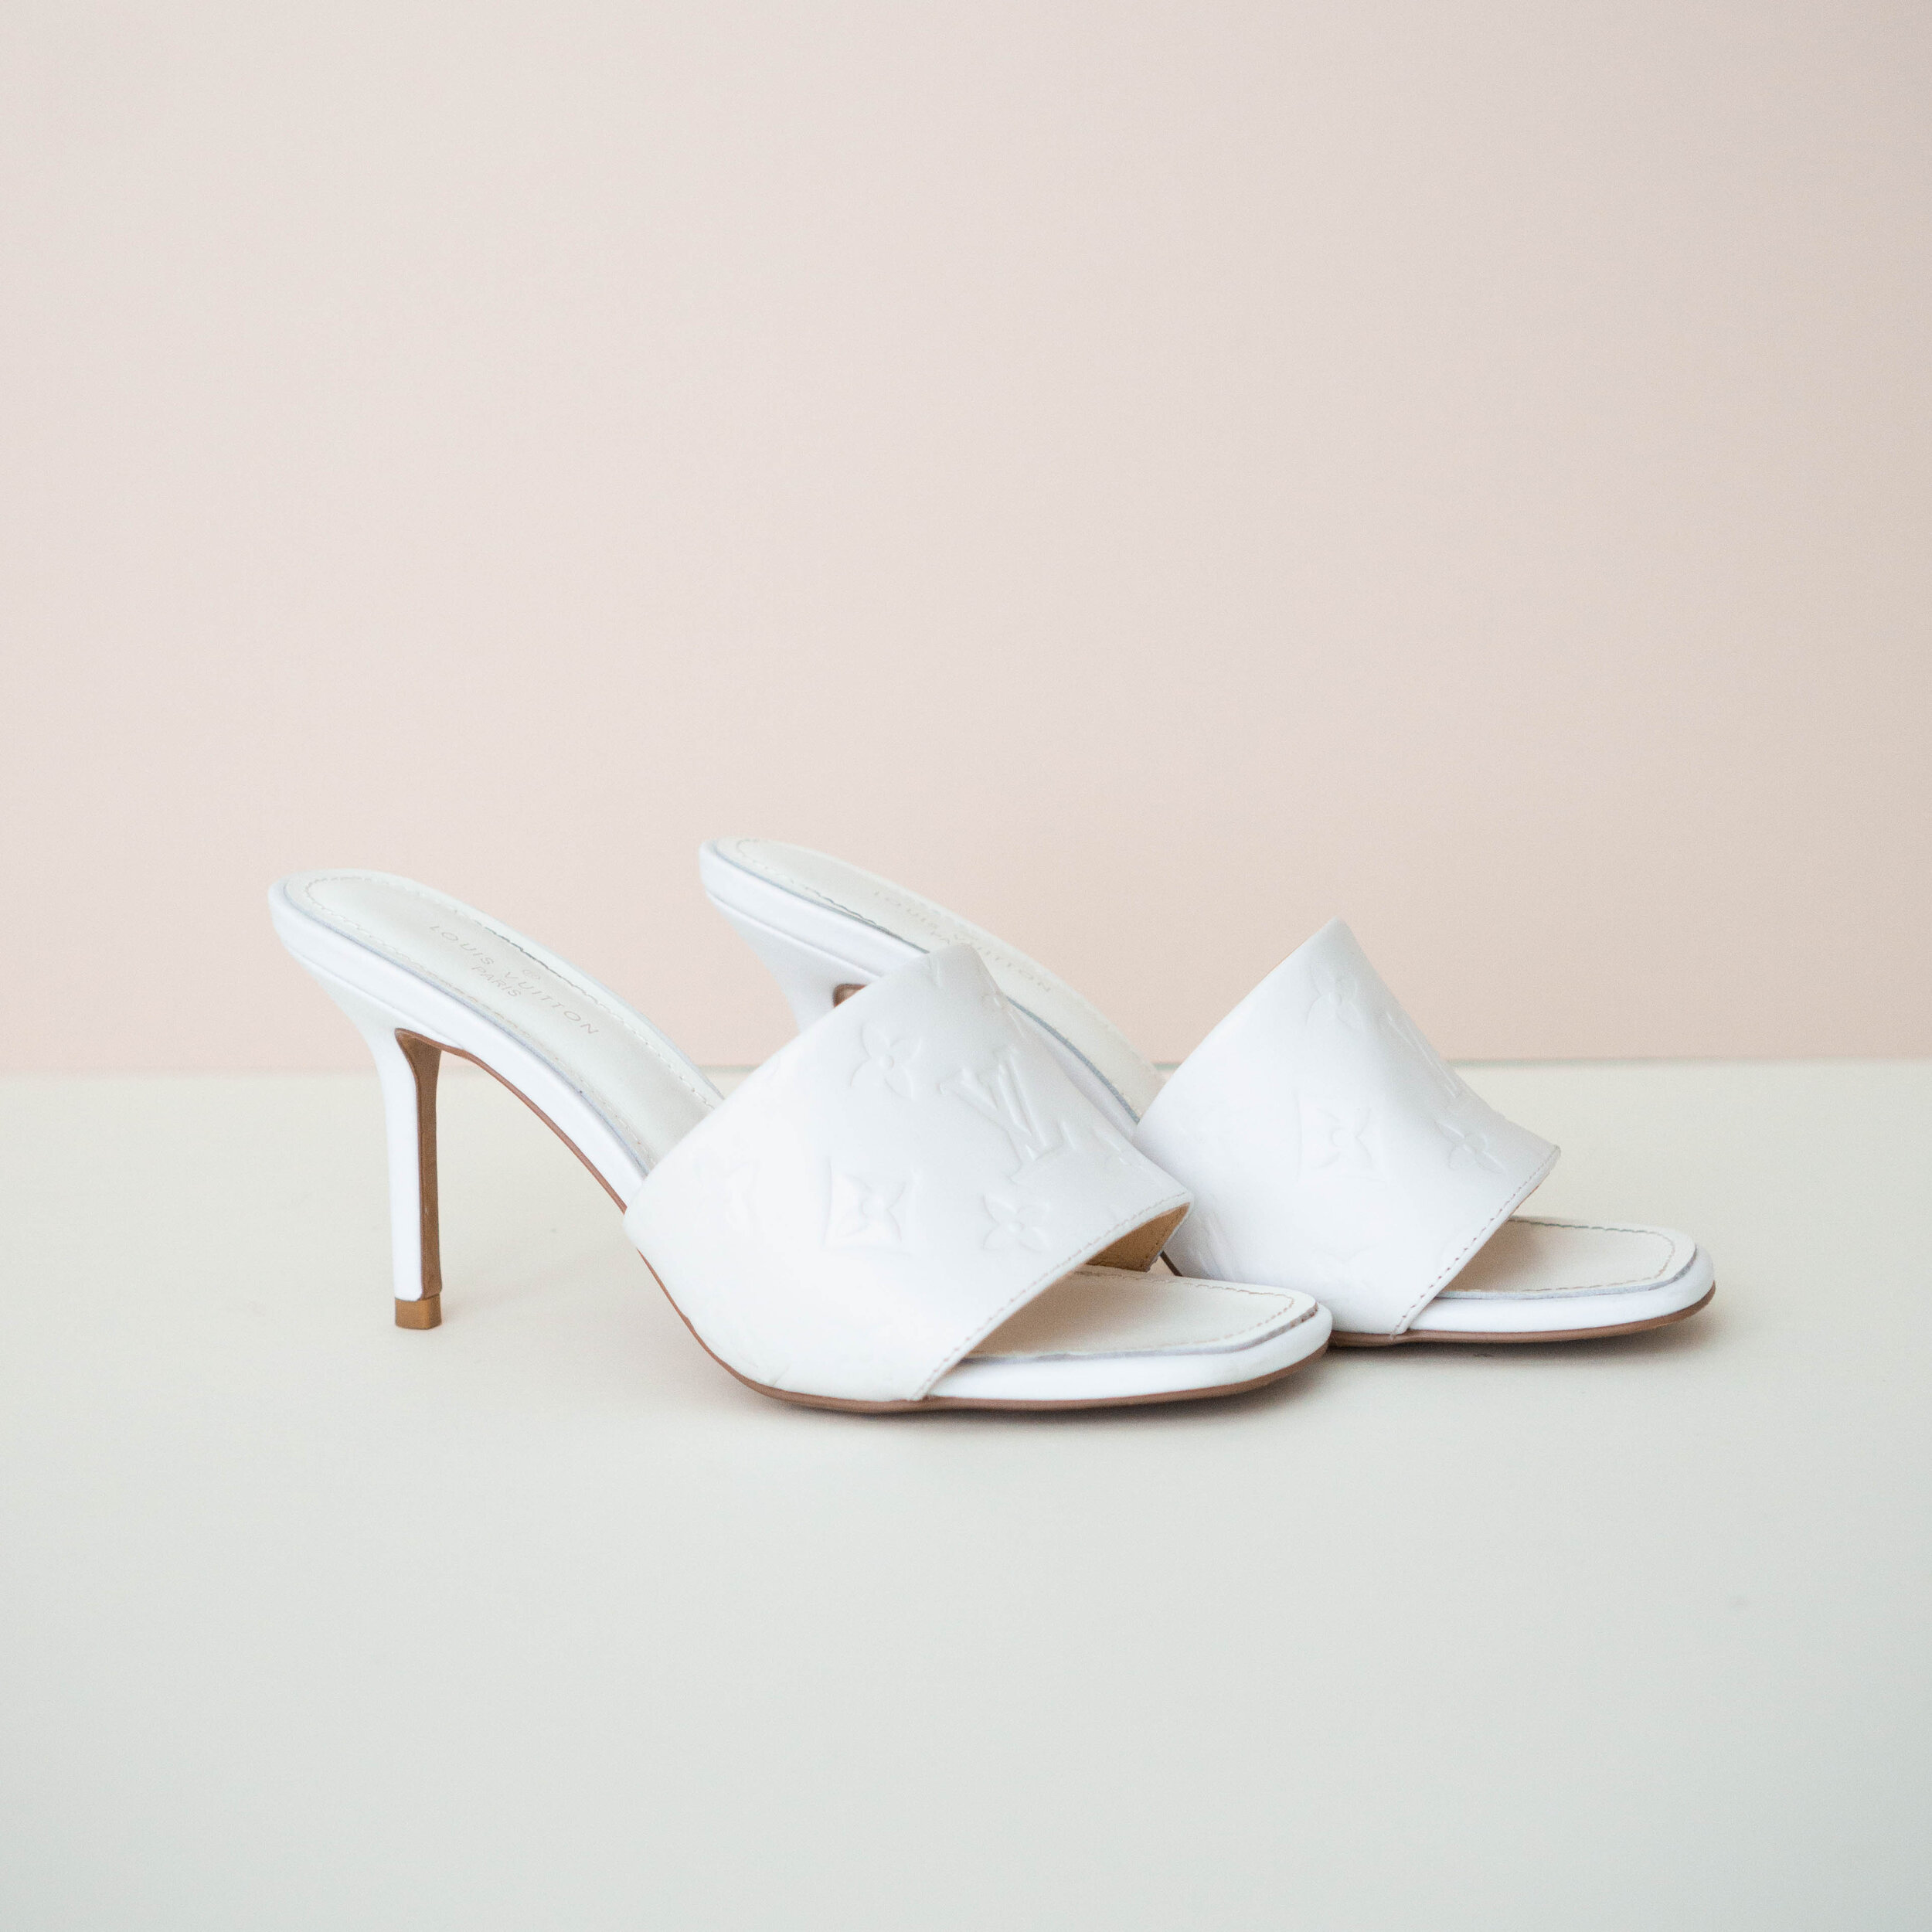 L v heels 2021 white